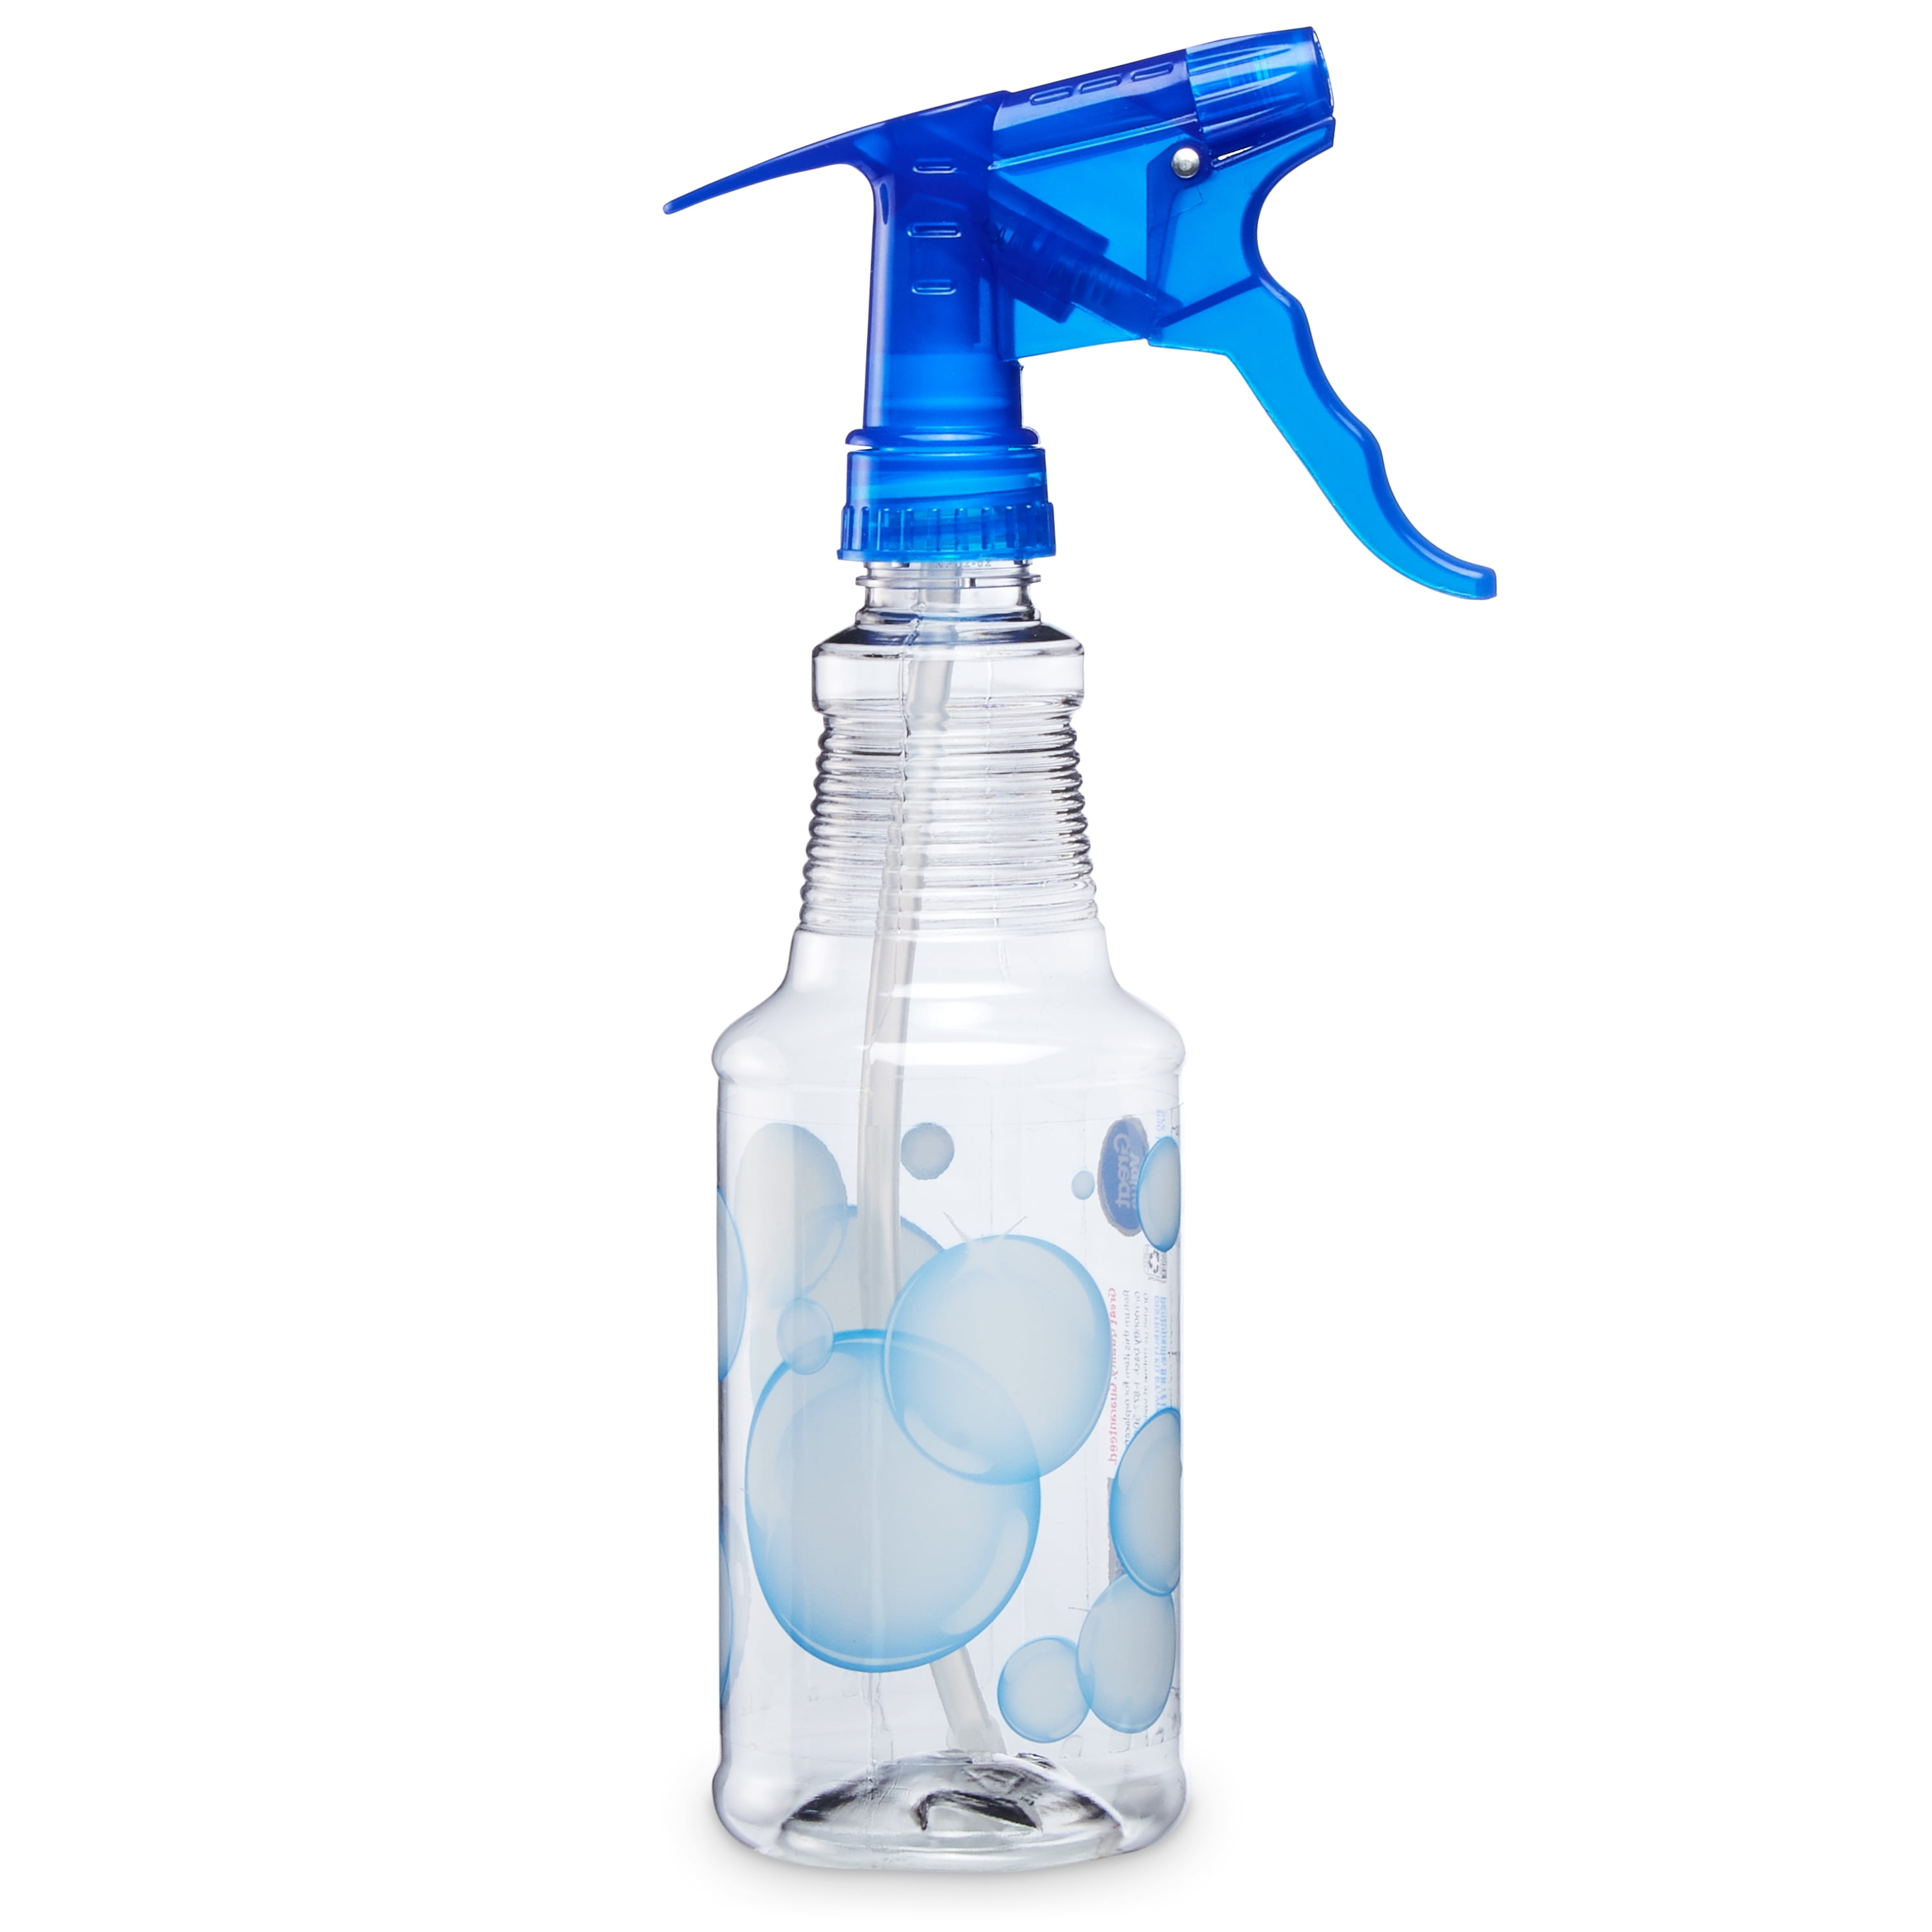 plastic spray bottles walmart